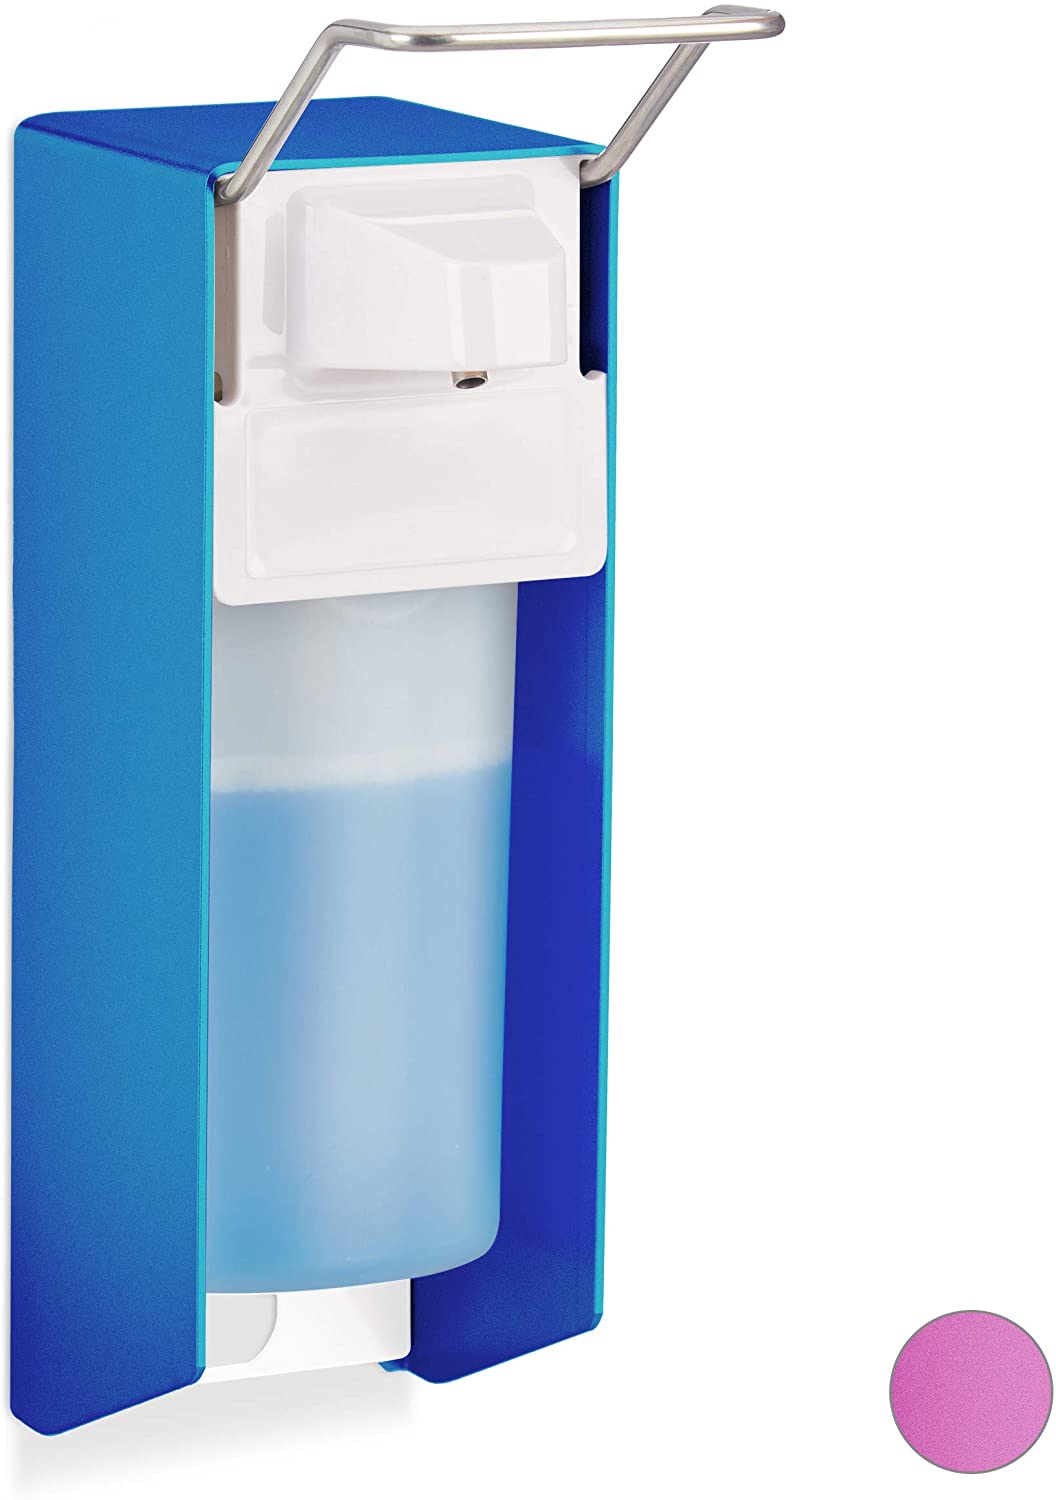 Relaxdays Euro Dispenser, 500 ml, Disinfectant, Soap, Elbow Lever, Wall Mount, Hygiene Dispenser, Blue